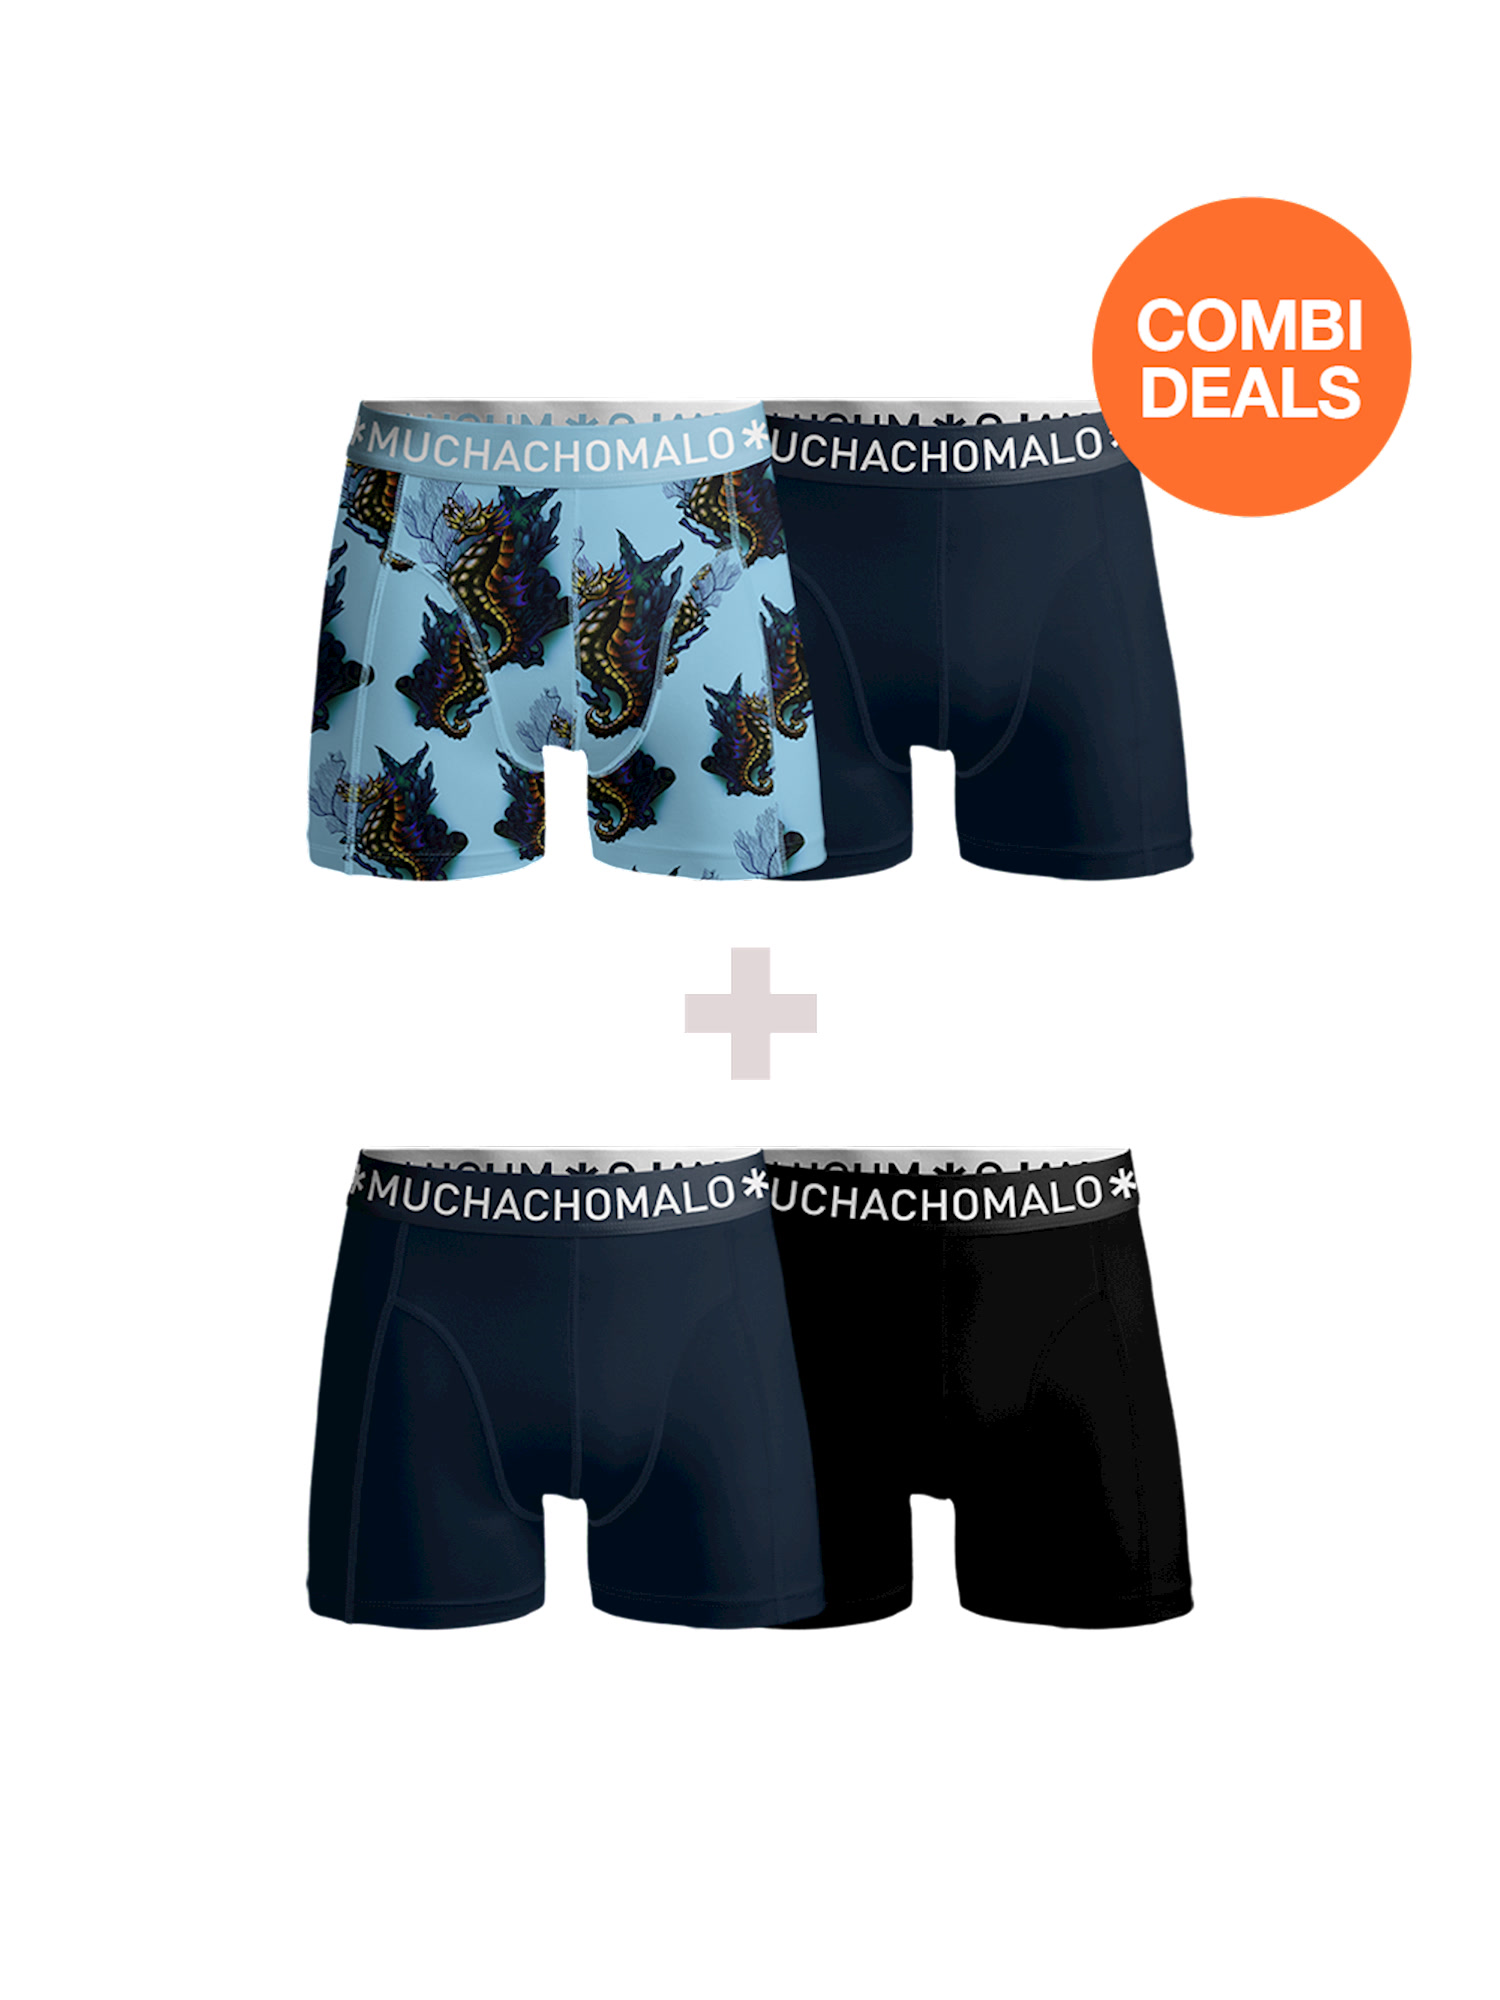 Боксеры Muchachomalo 2er-Set: Boxershorts, цвет Multicolor/Blue/Black/Blue боксеры muchachomalo 2er set boxershorts цвет multicolor blue